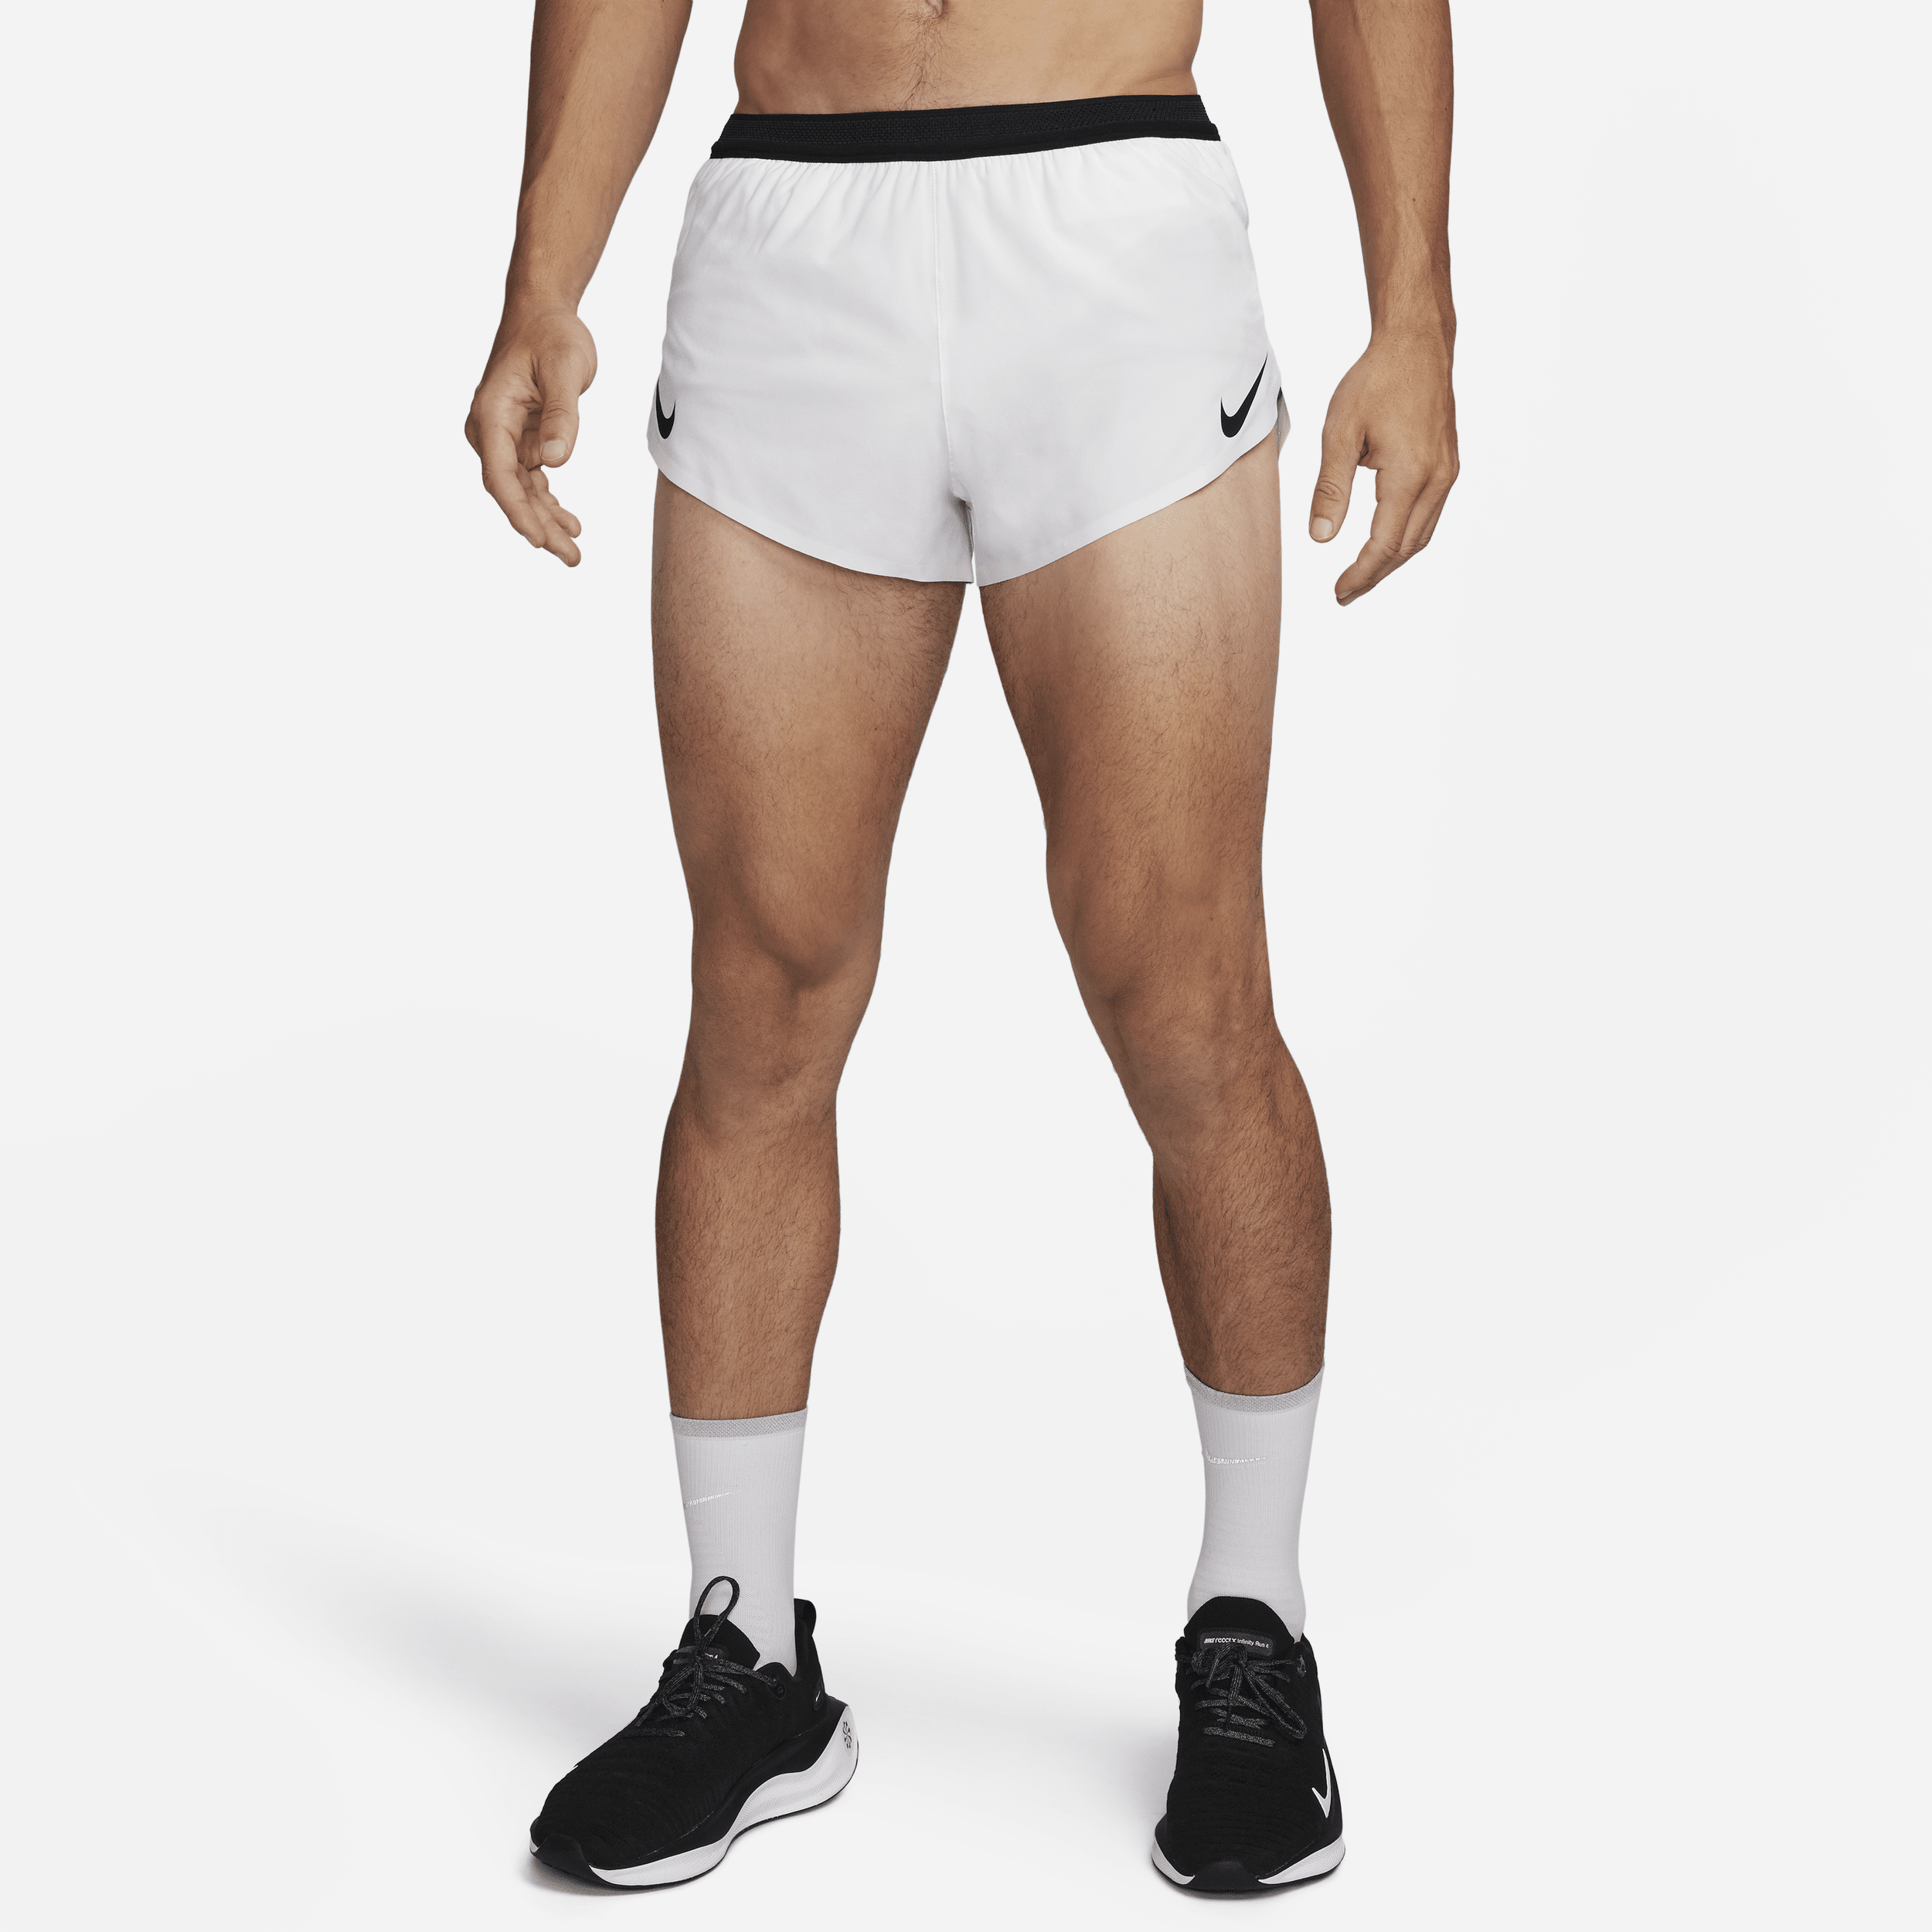 Shorts da running con slip foderato 5 cm Dri-FIT ADV Nike AeroSwift – Uomo - Bianco